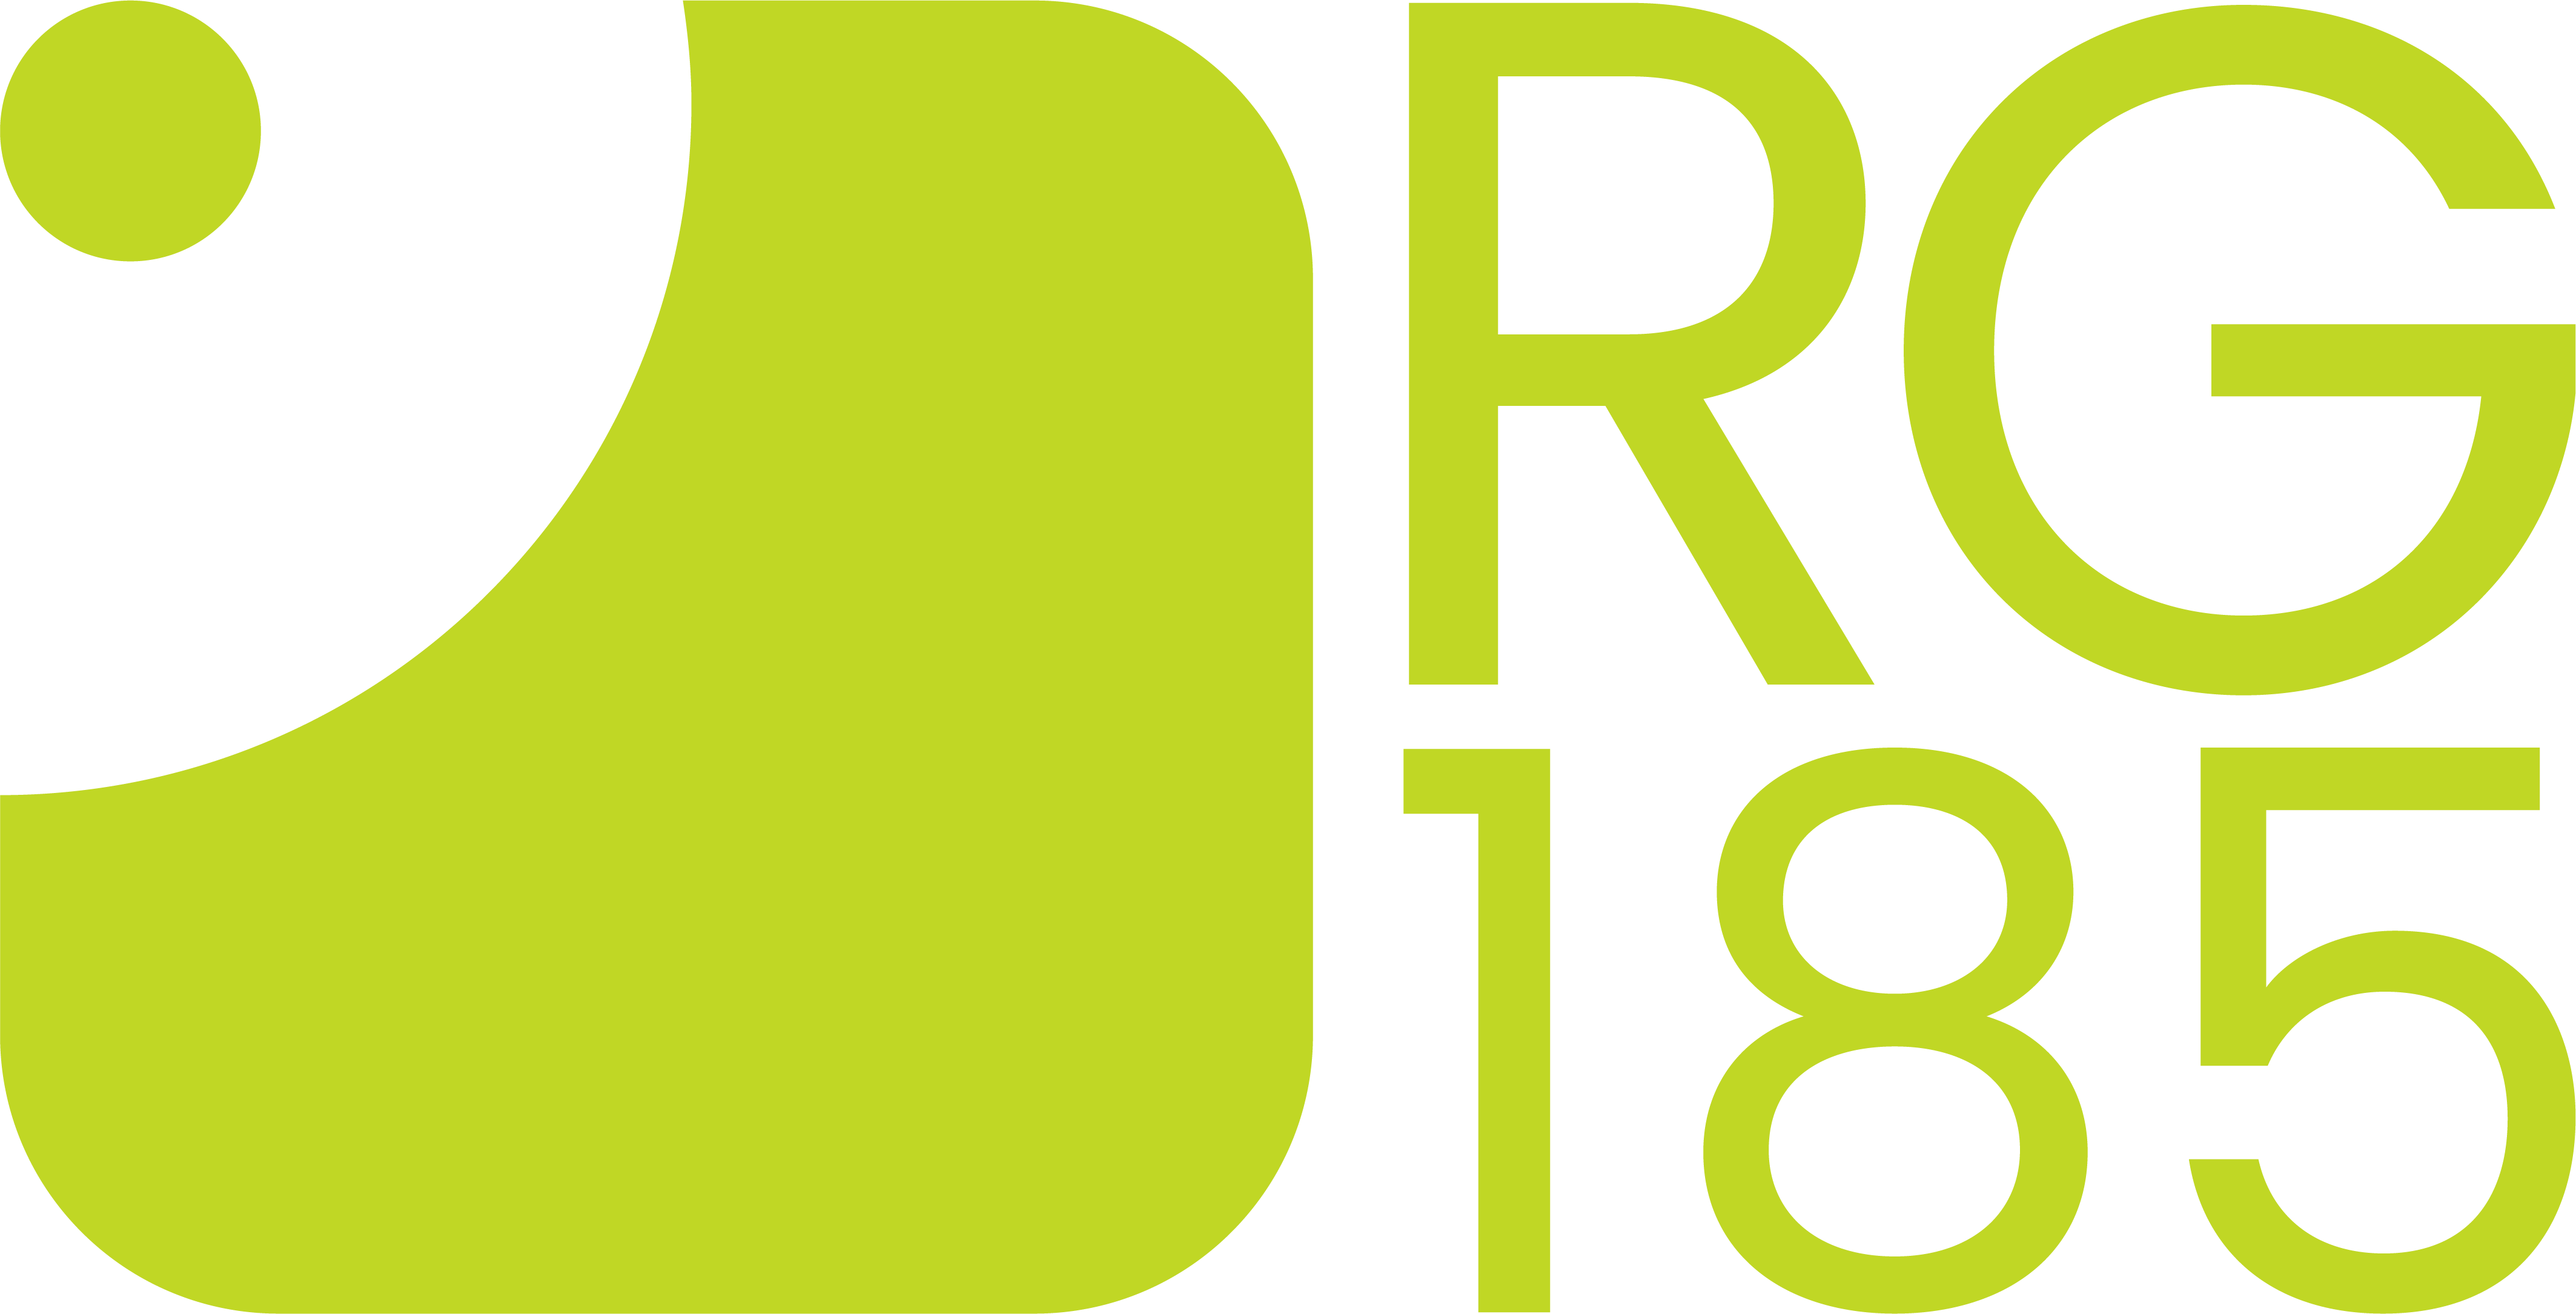  logotipo logo-rg185.png